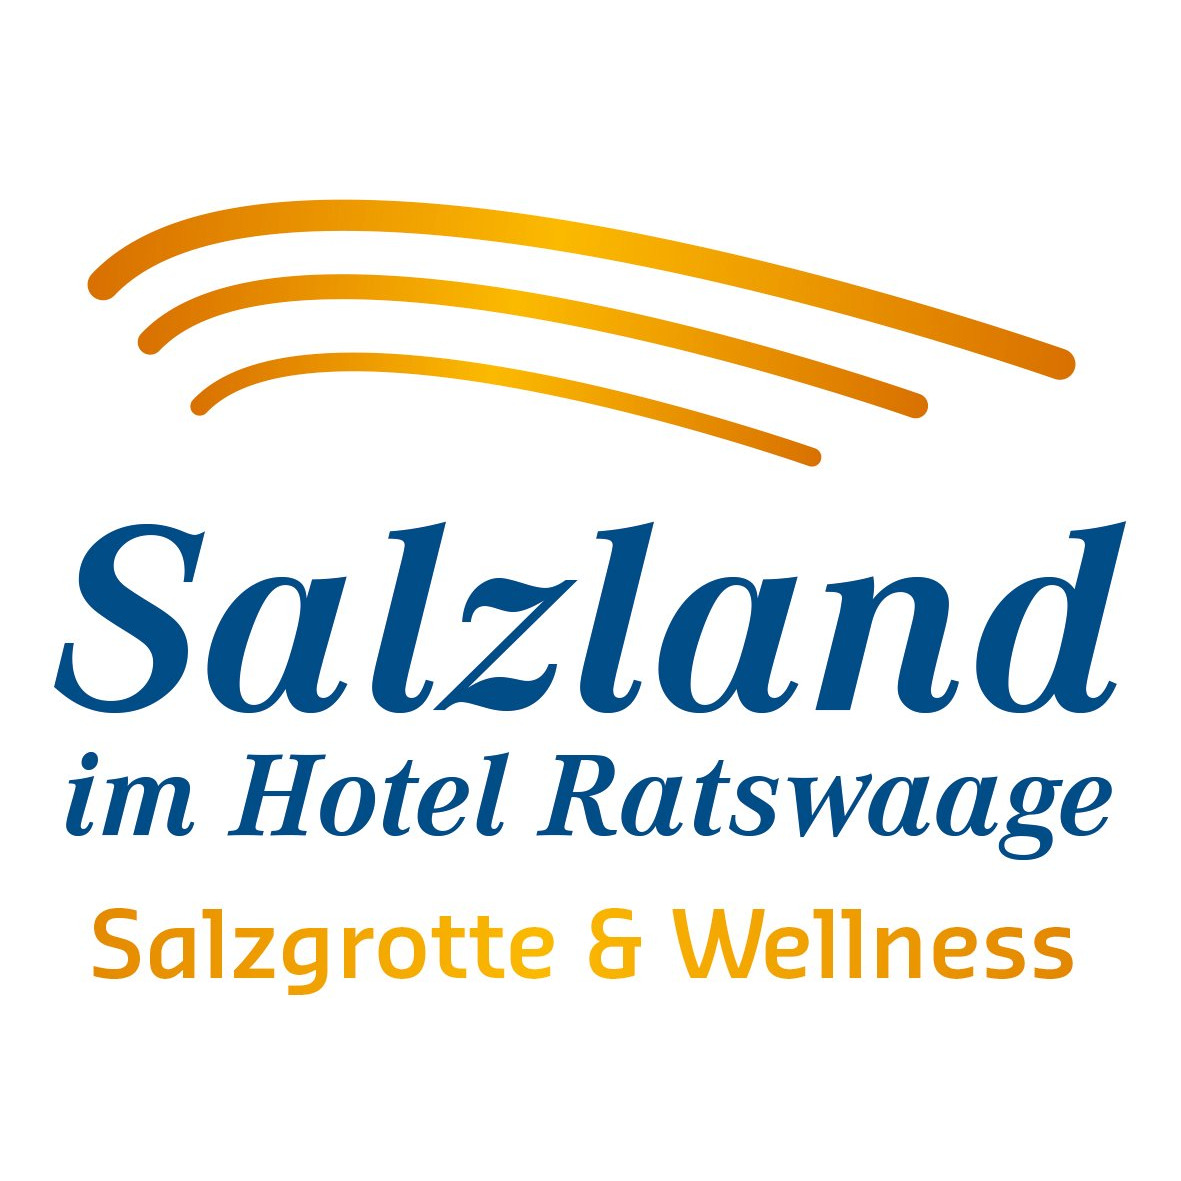 Salzland im Hotel Ratswaage in Magdeburg - Logo